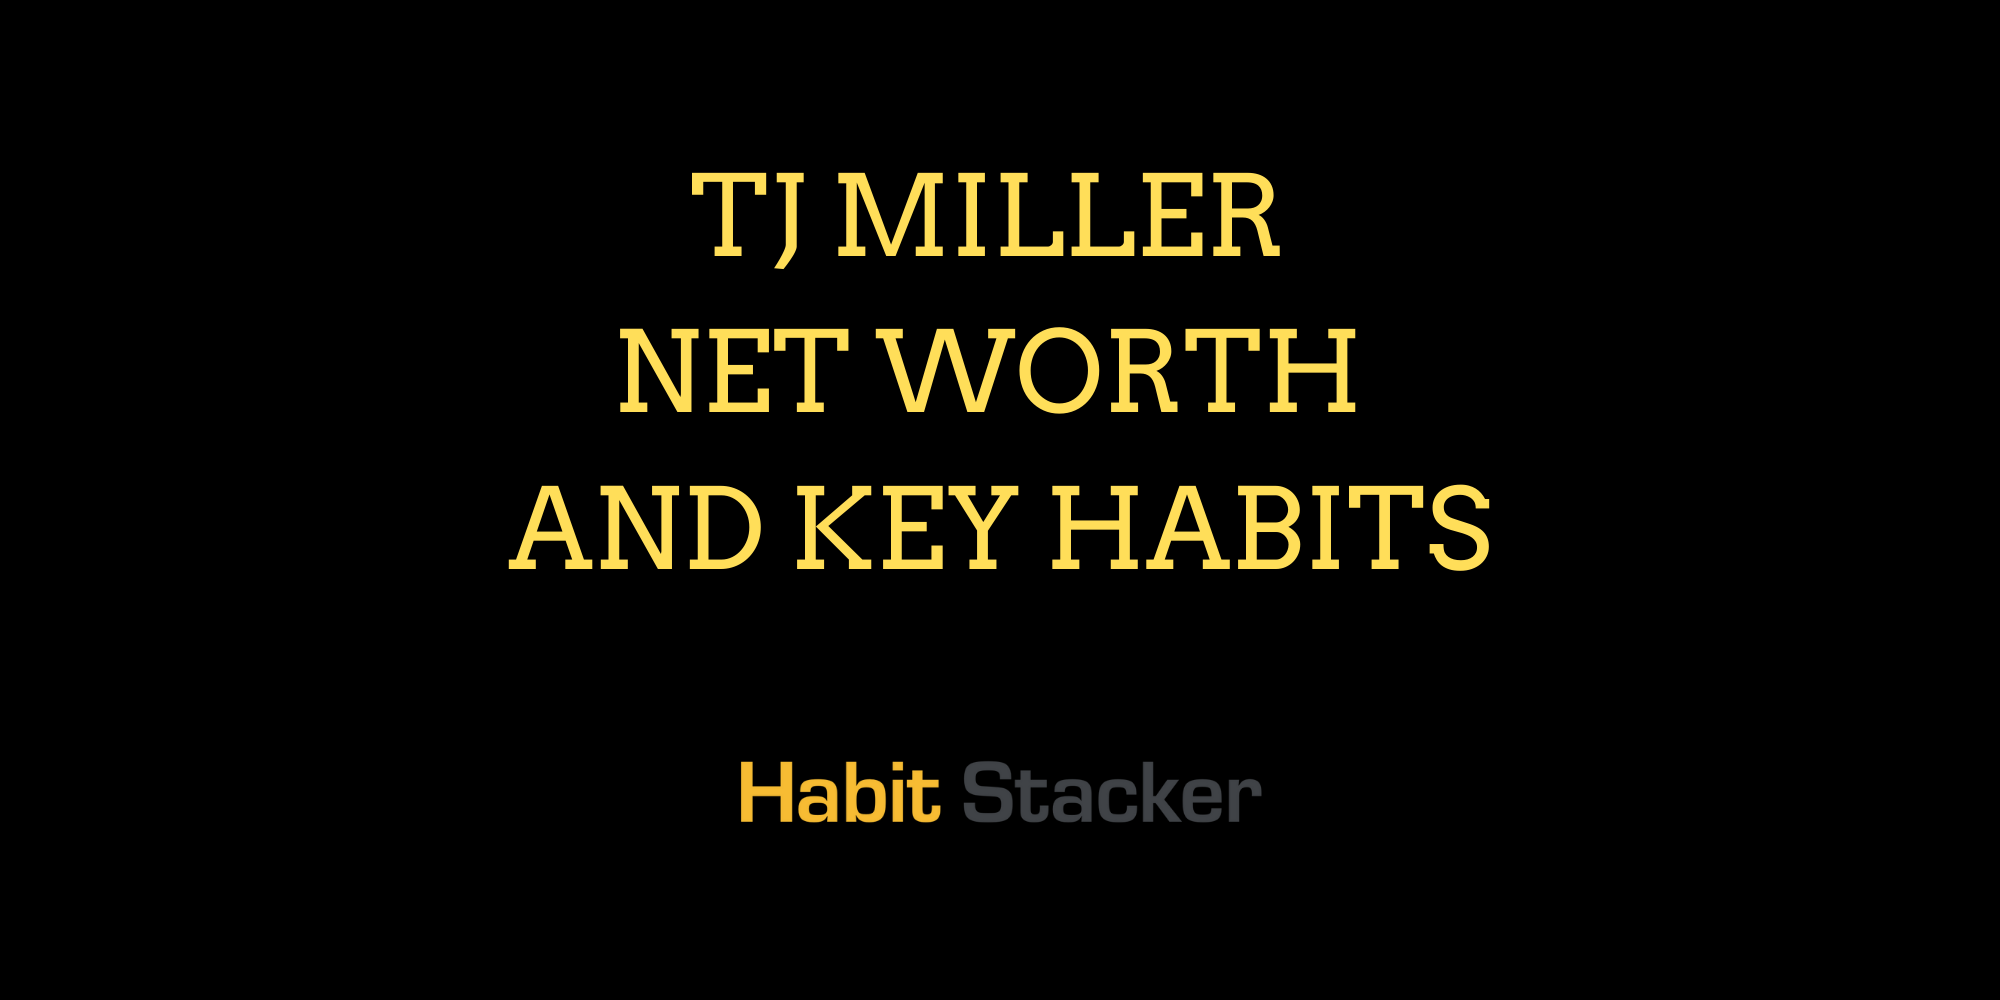 TJ Miller Net Worth and Key Habits